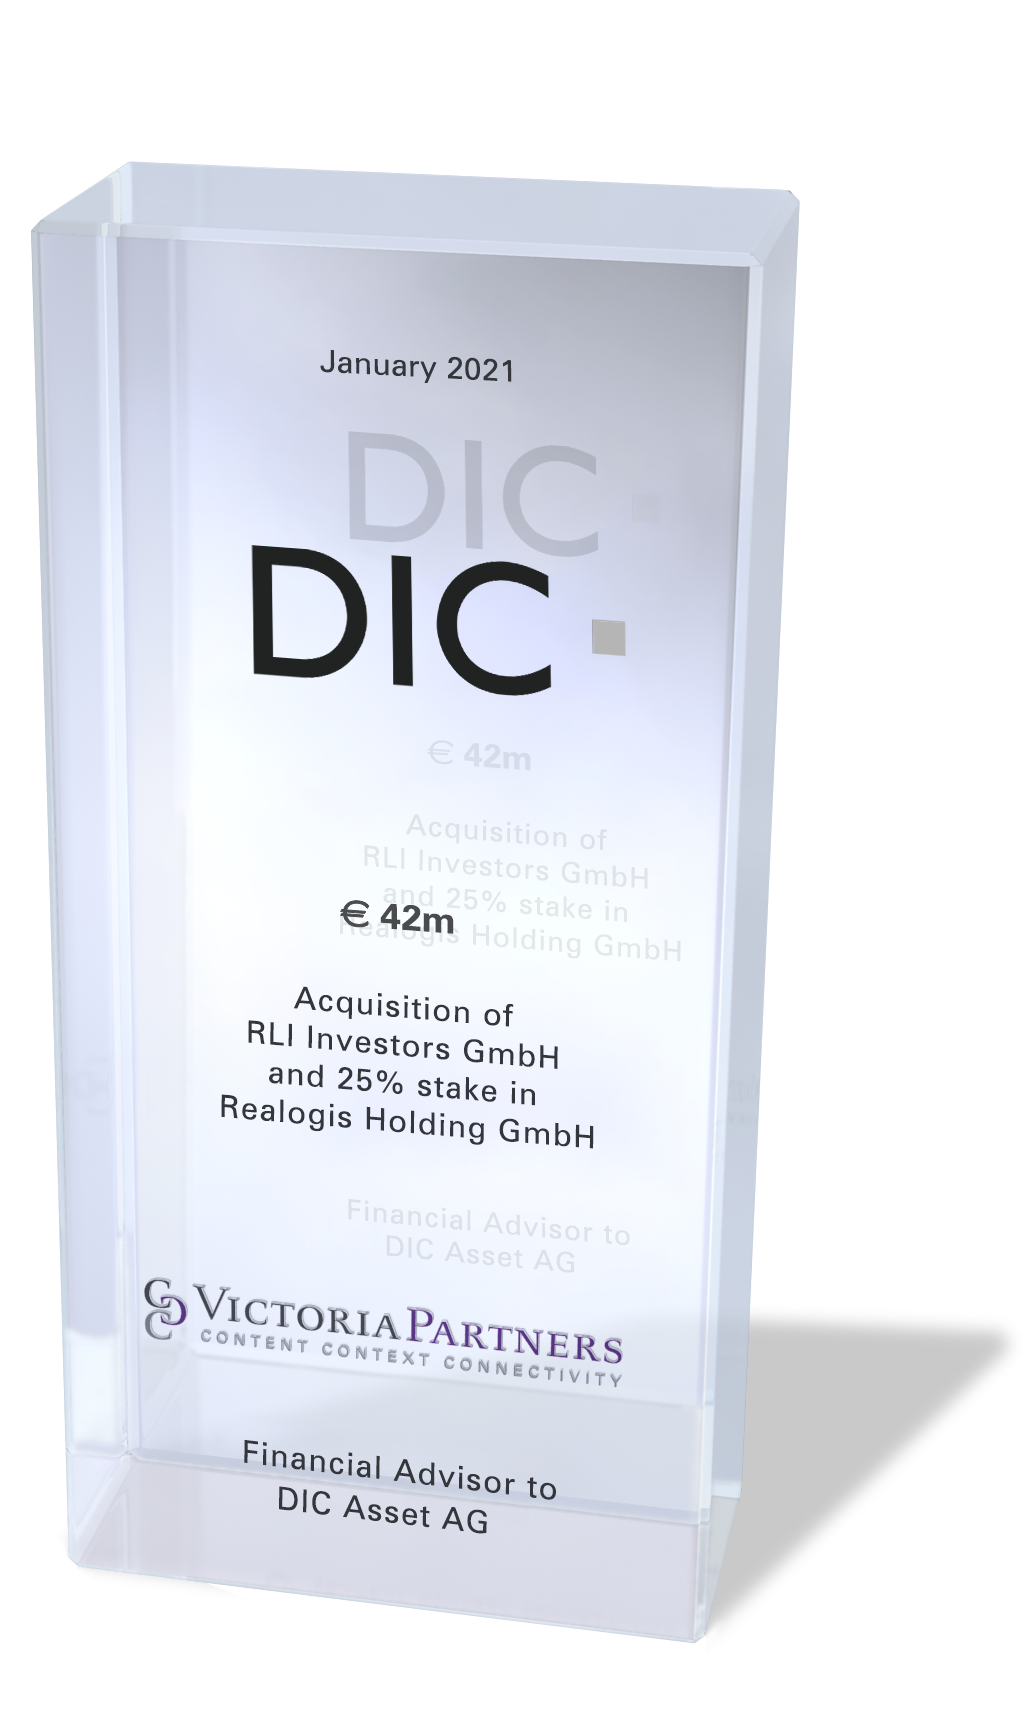 VICTORIAPARTNERS - Financial Advisor to DIC Asset AG - January 2021